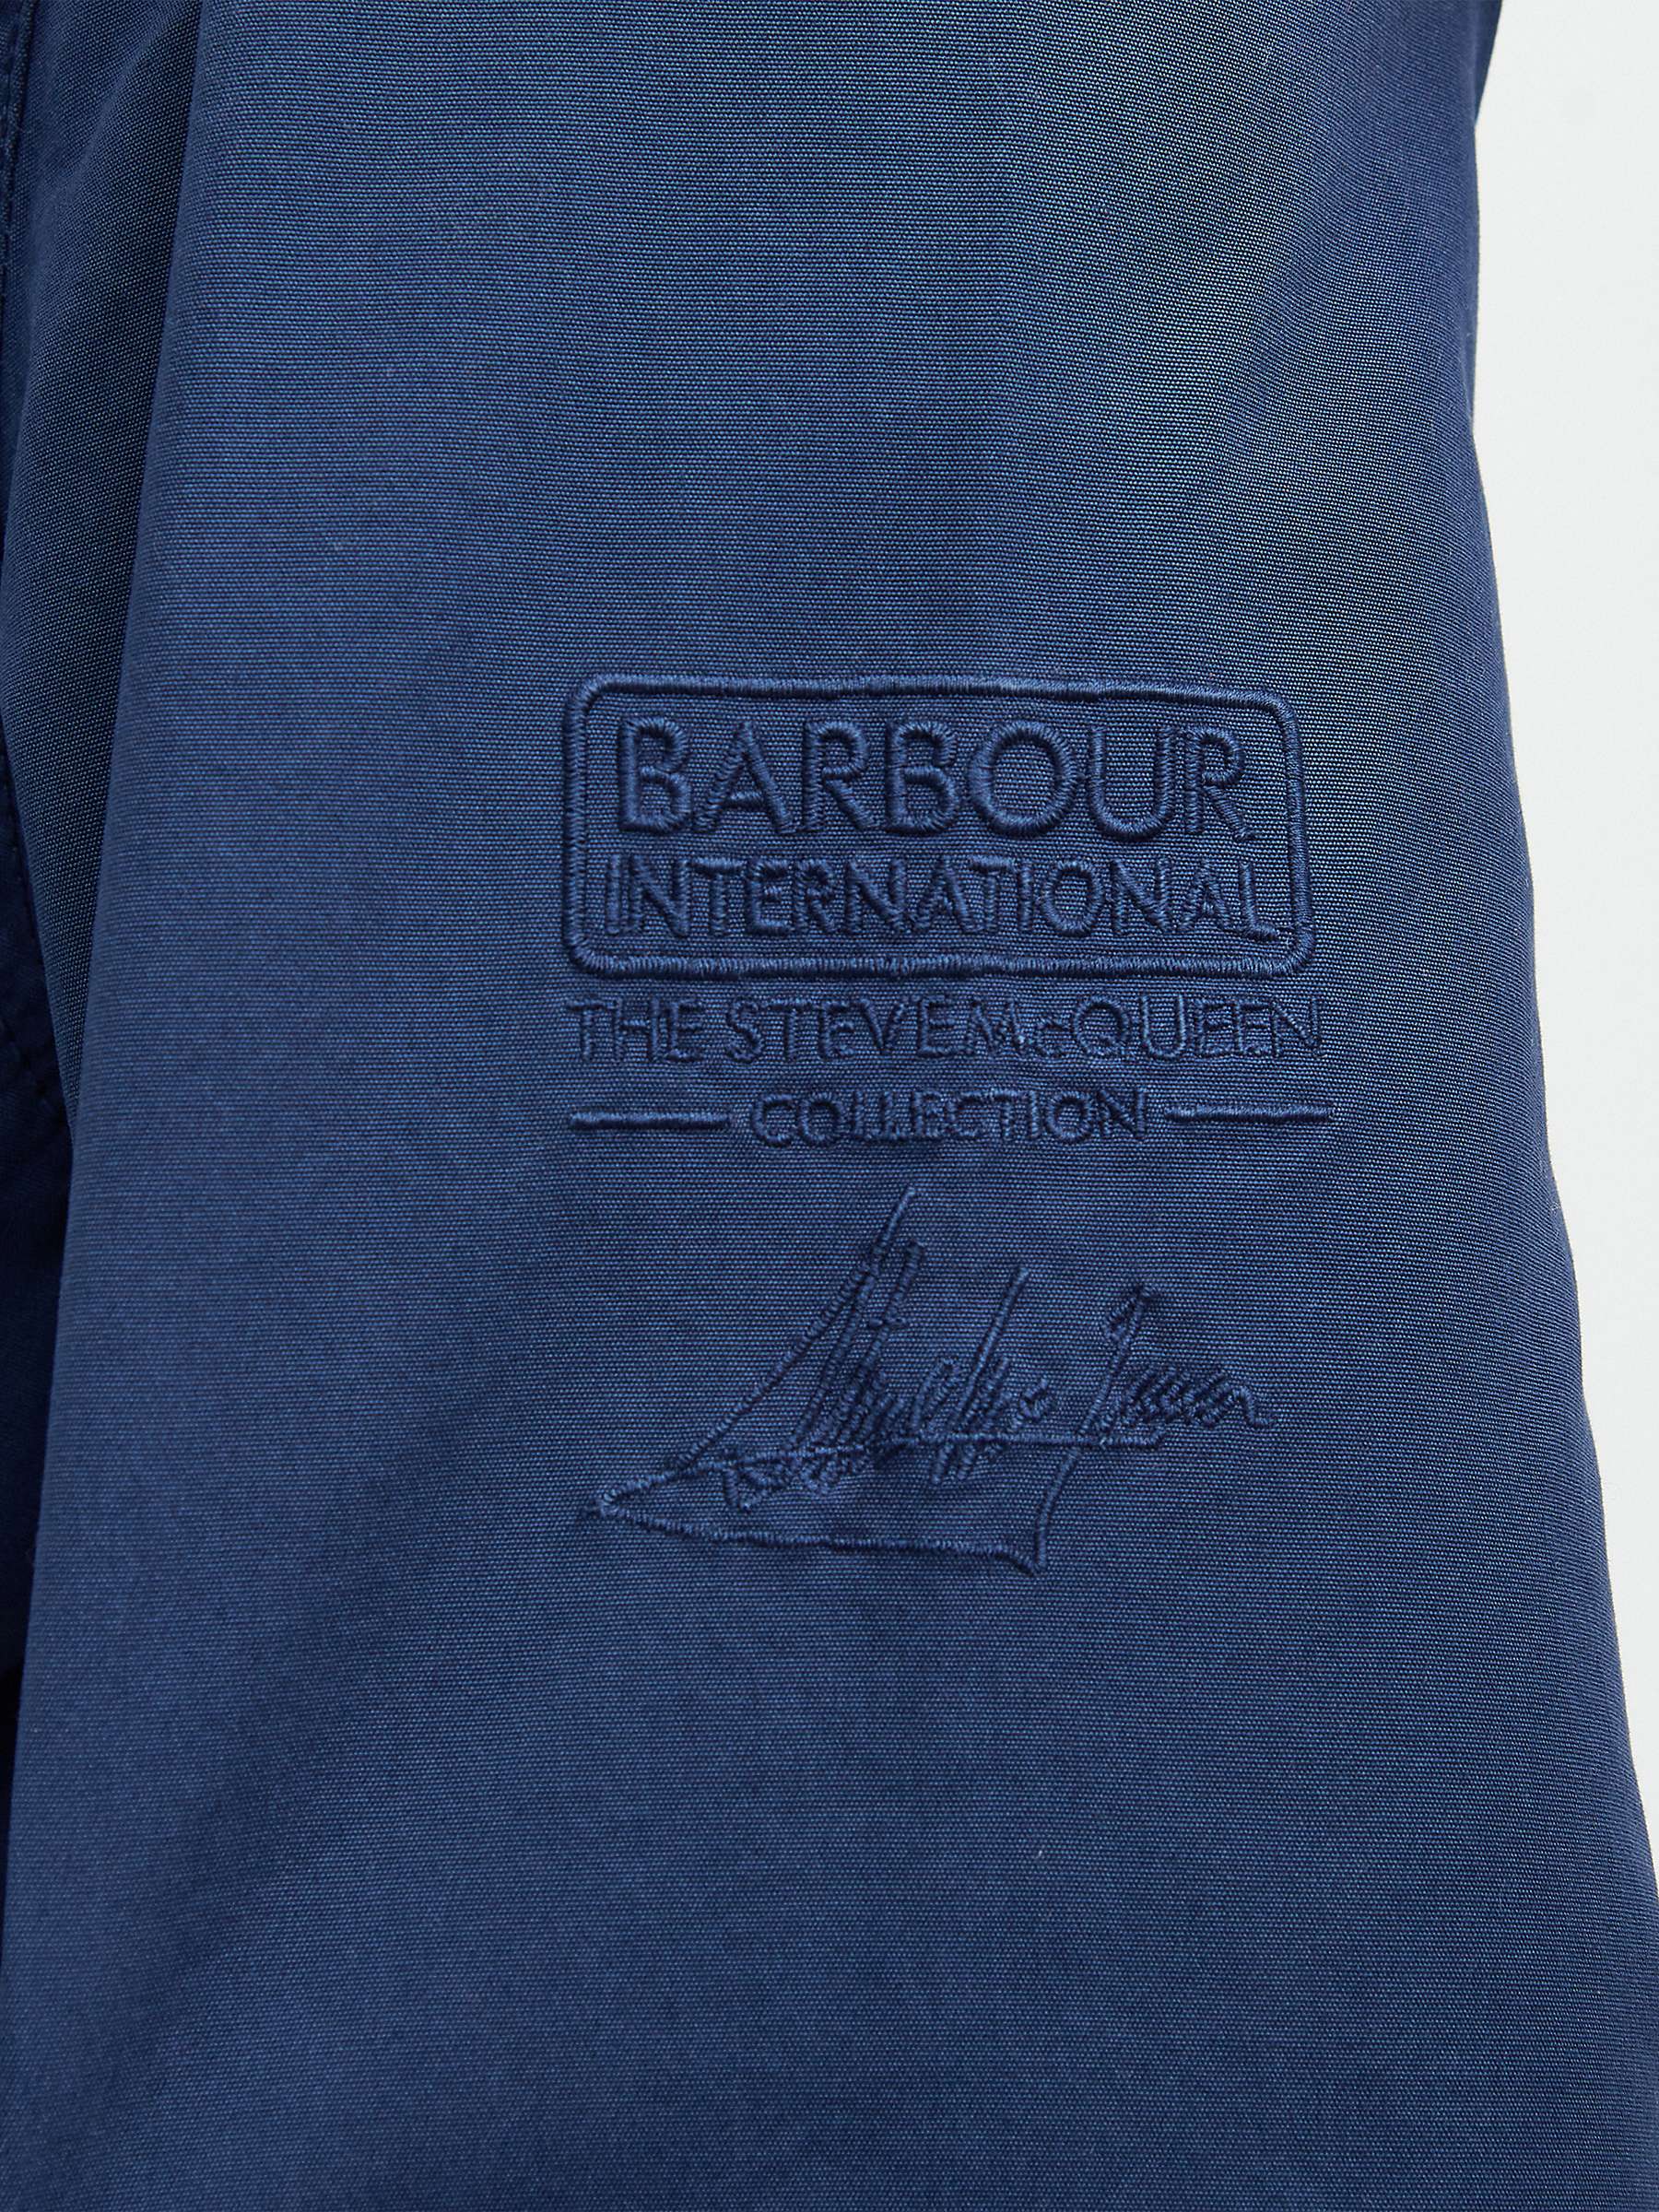 Buy Barbour International Circuit Overshirt, Washed Cobalt Online at johnlewis.com